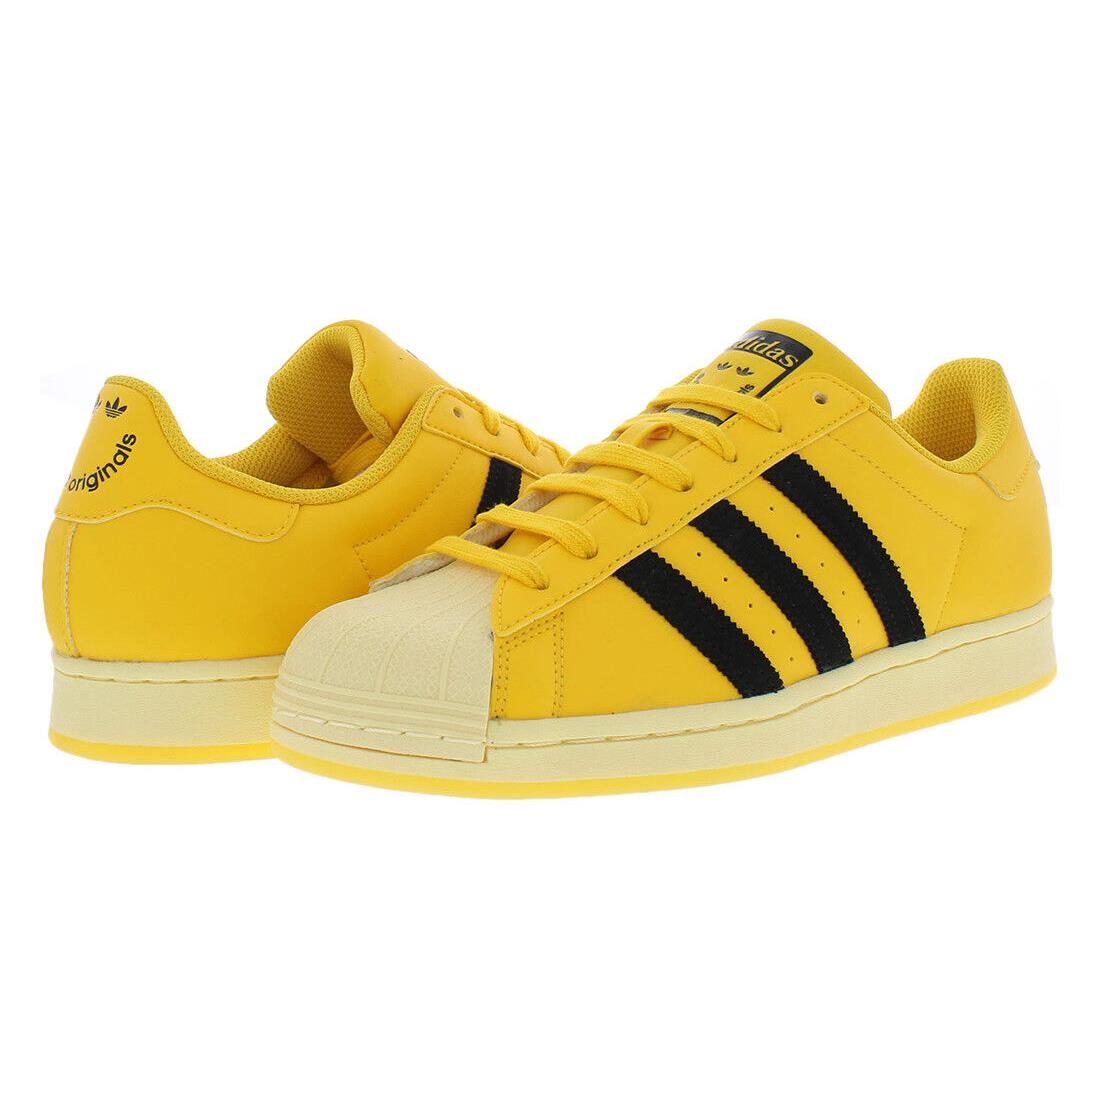 Adidas Superstar Mens Shoes - Yellow/Black, Main: Yellow